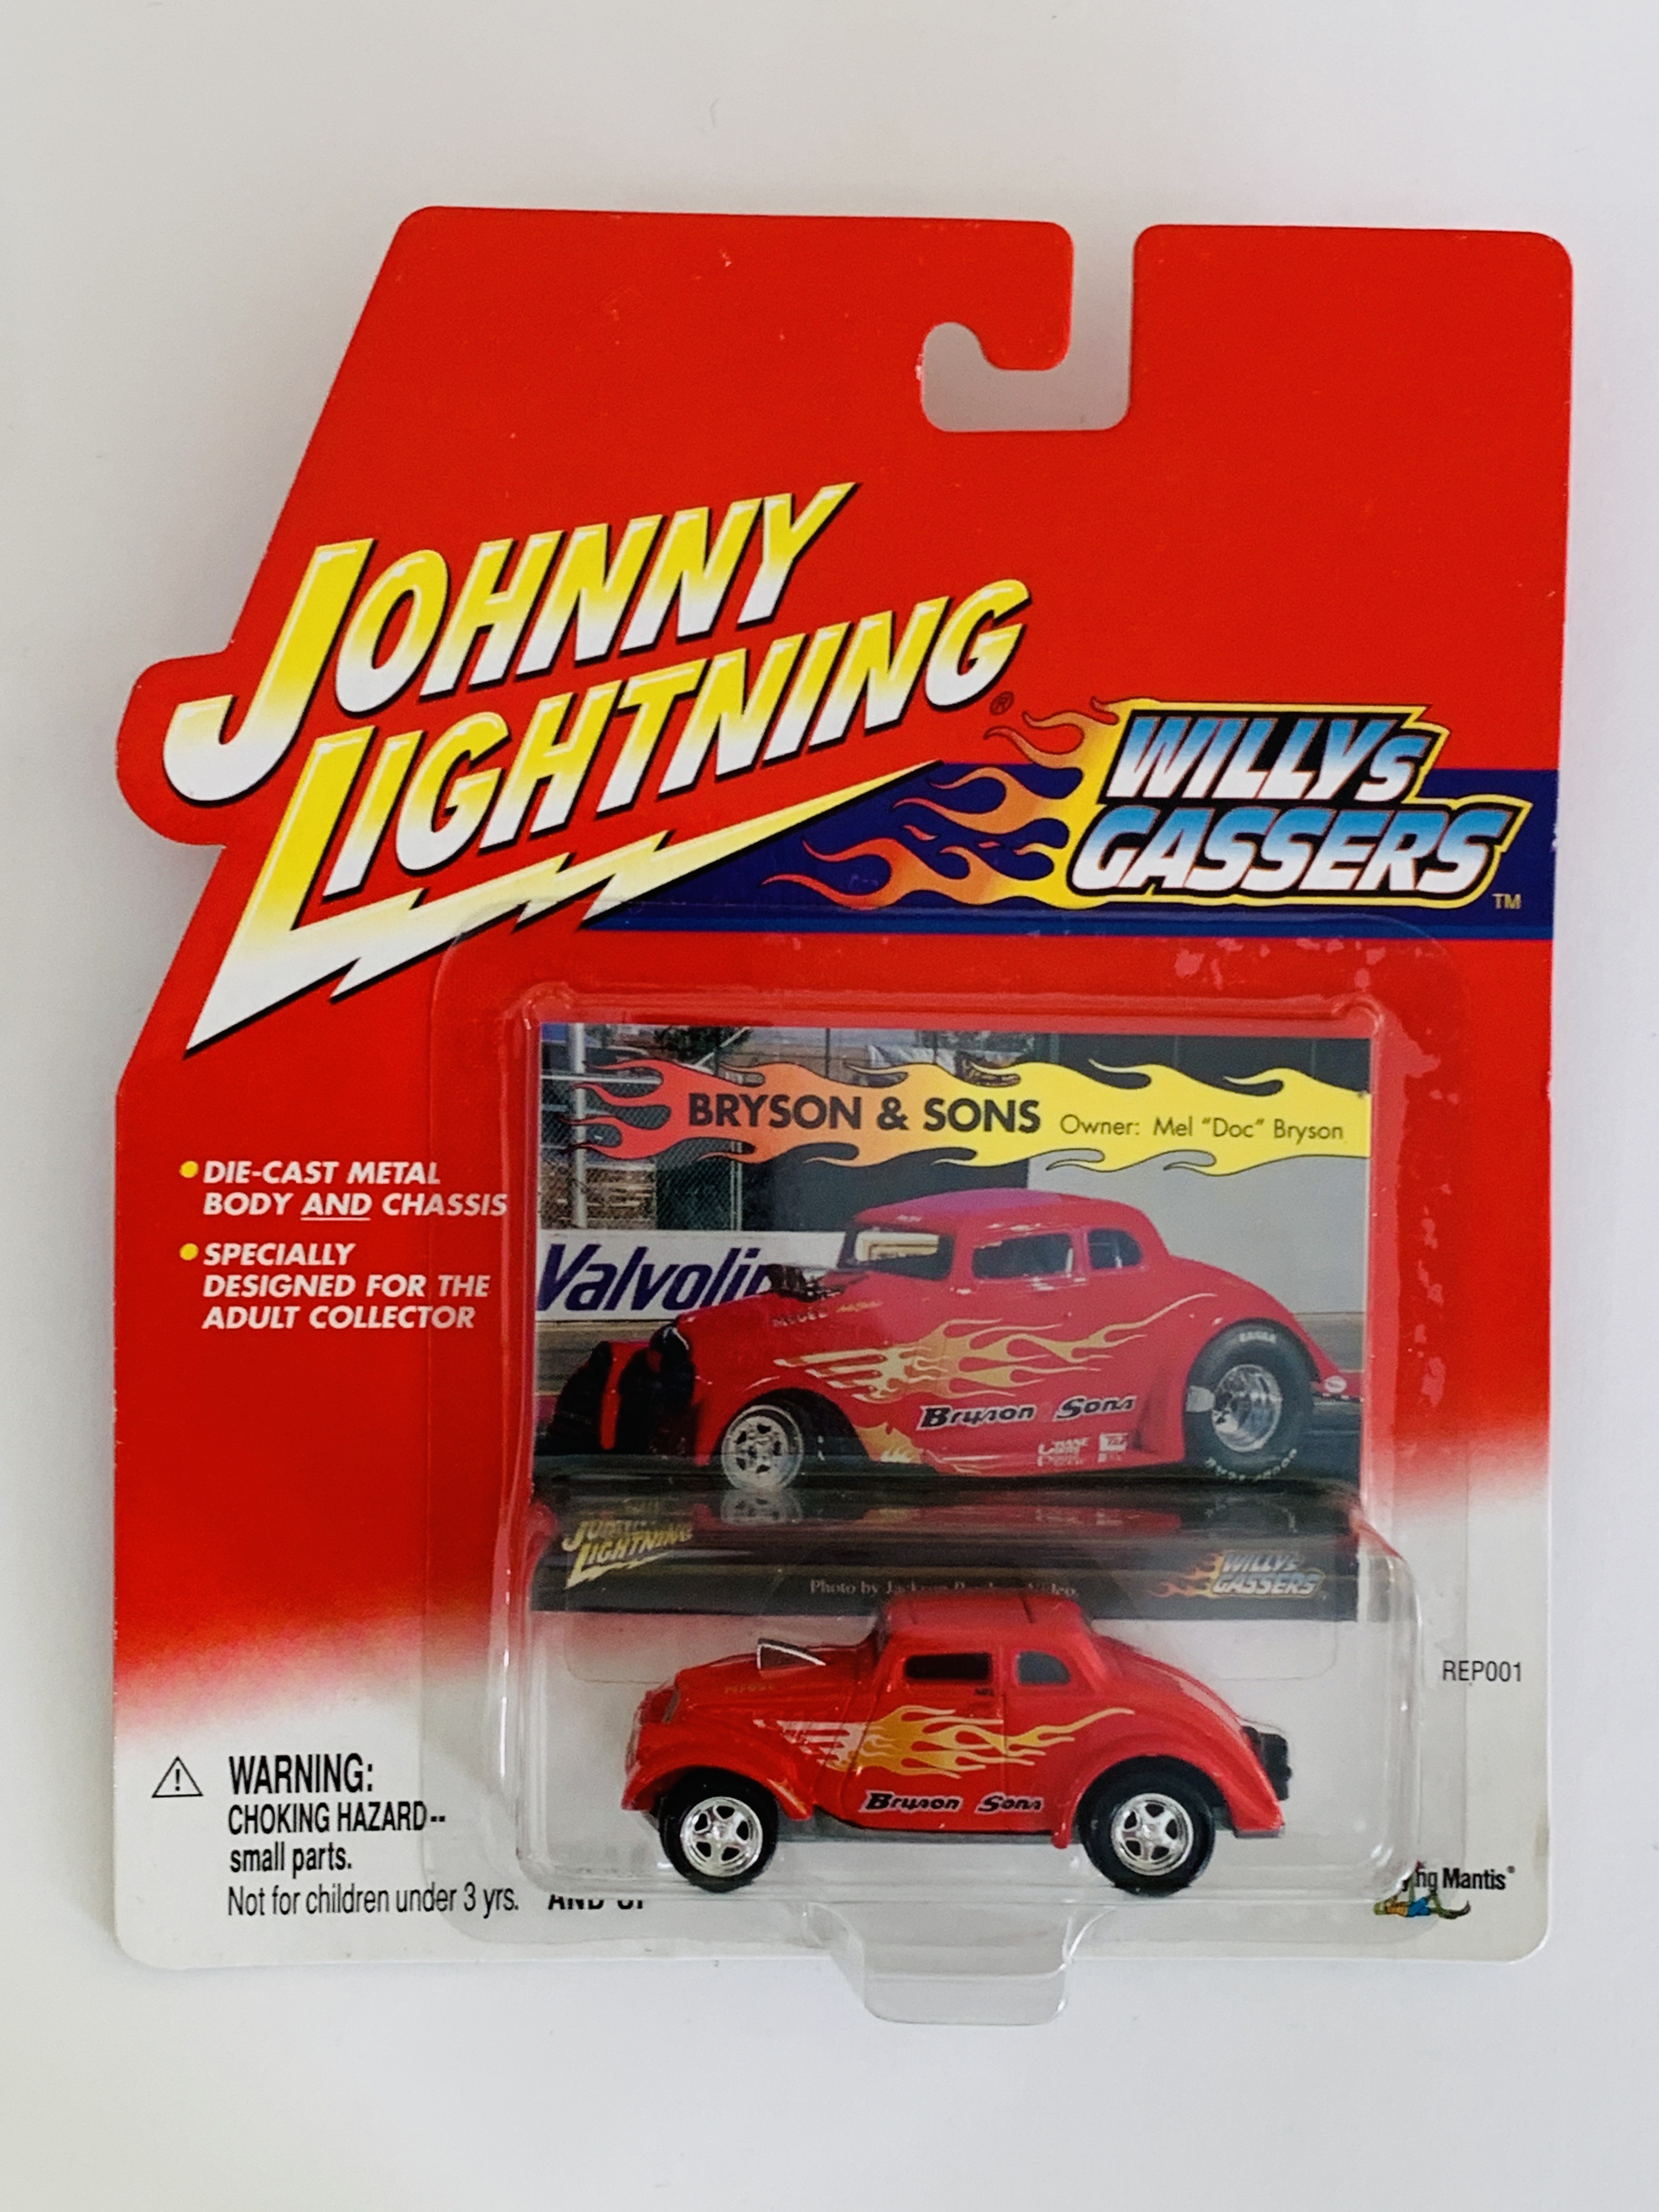 Johnny Lightning Willys Gassers Bryson & Sons Willys Gasser